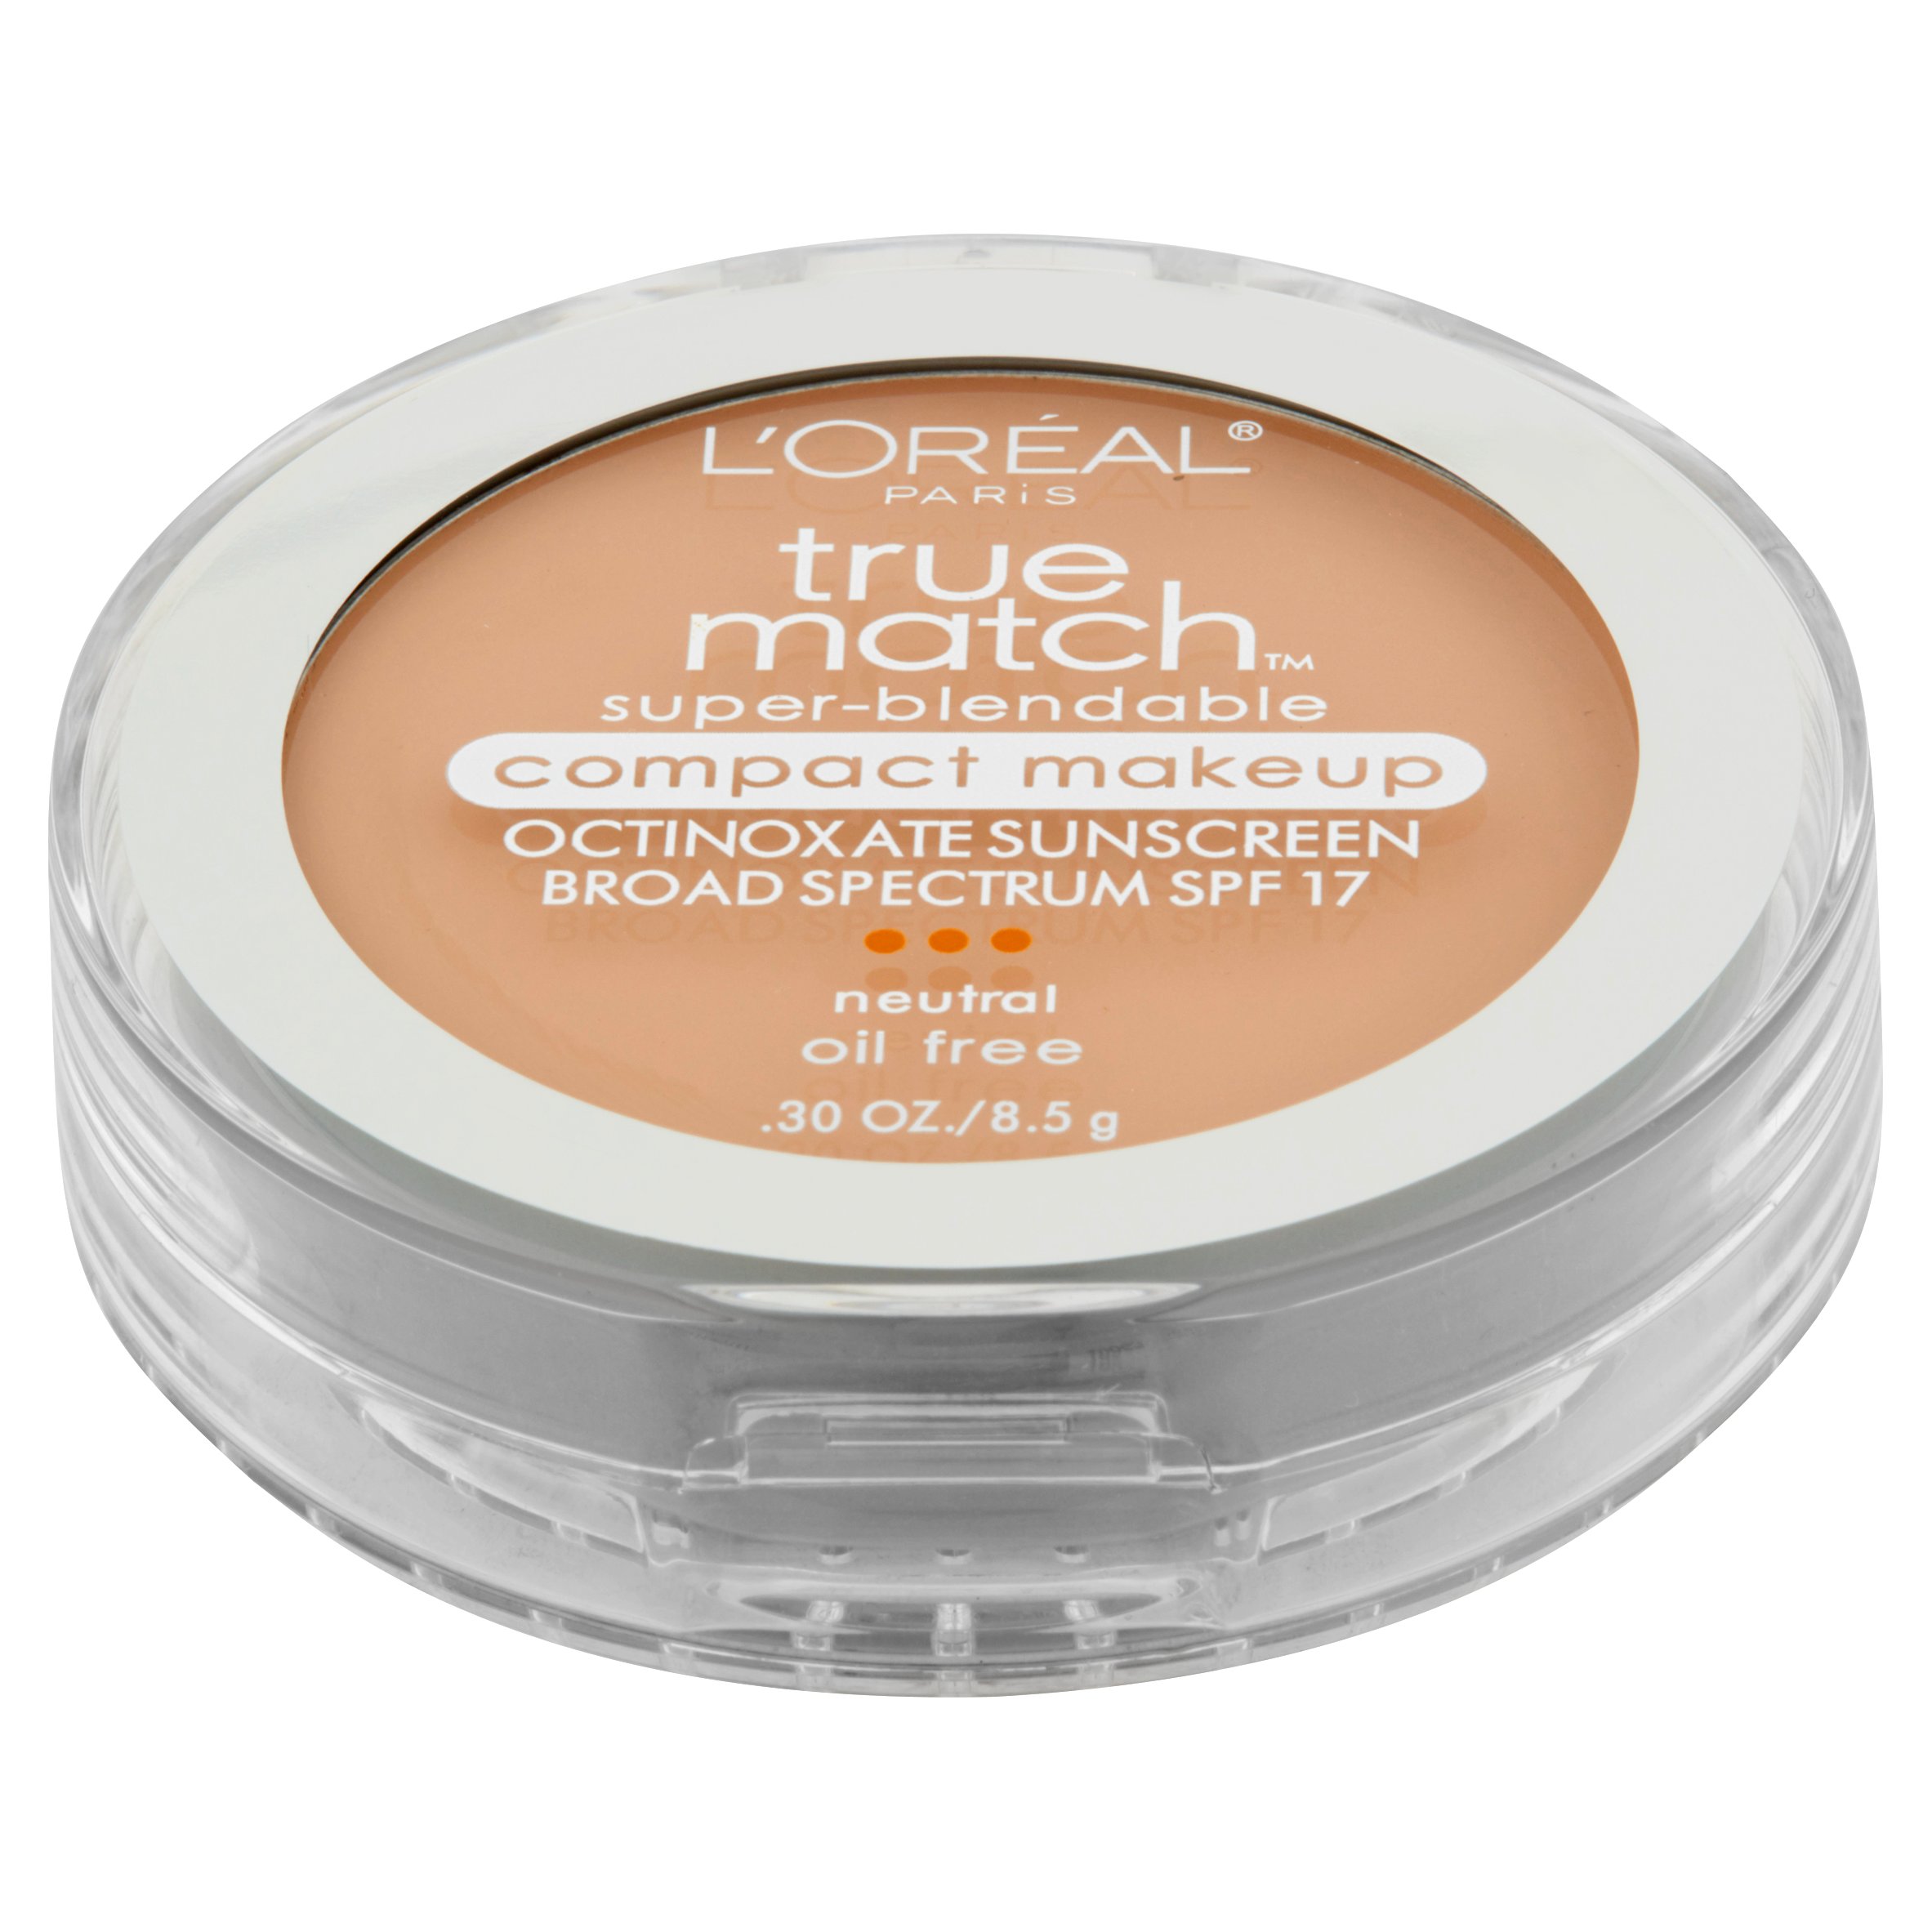 L'Oreal Paris True Match Super-Blendable Compact Makeup, Neutral Soft Ivory N1 - image 2 of 4